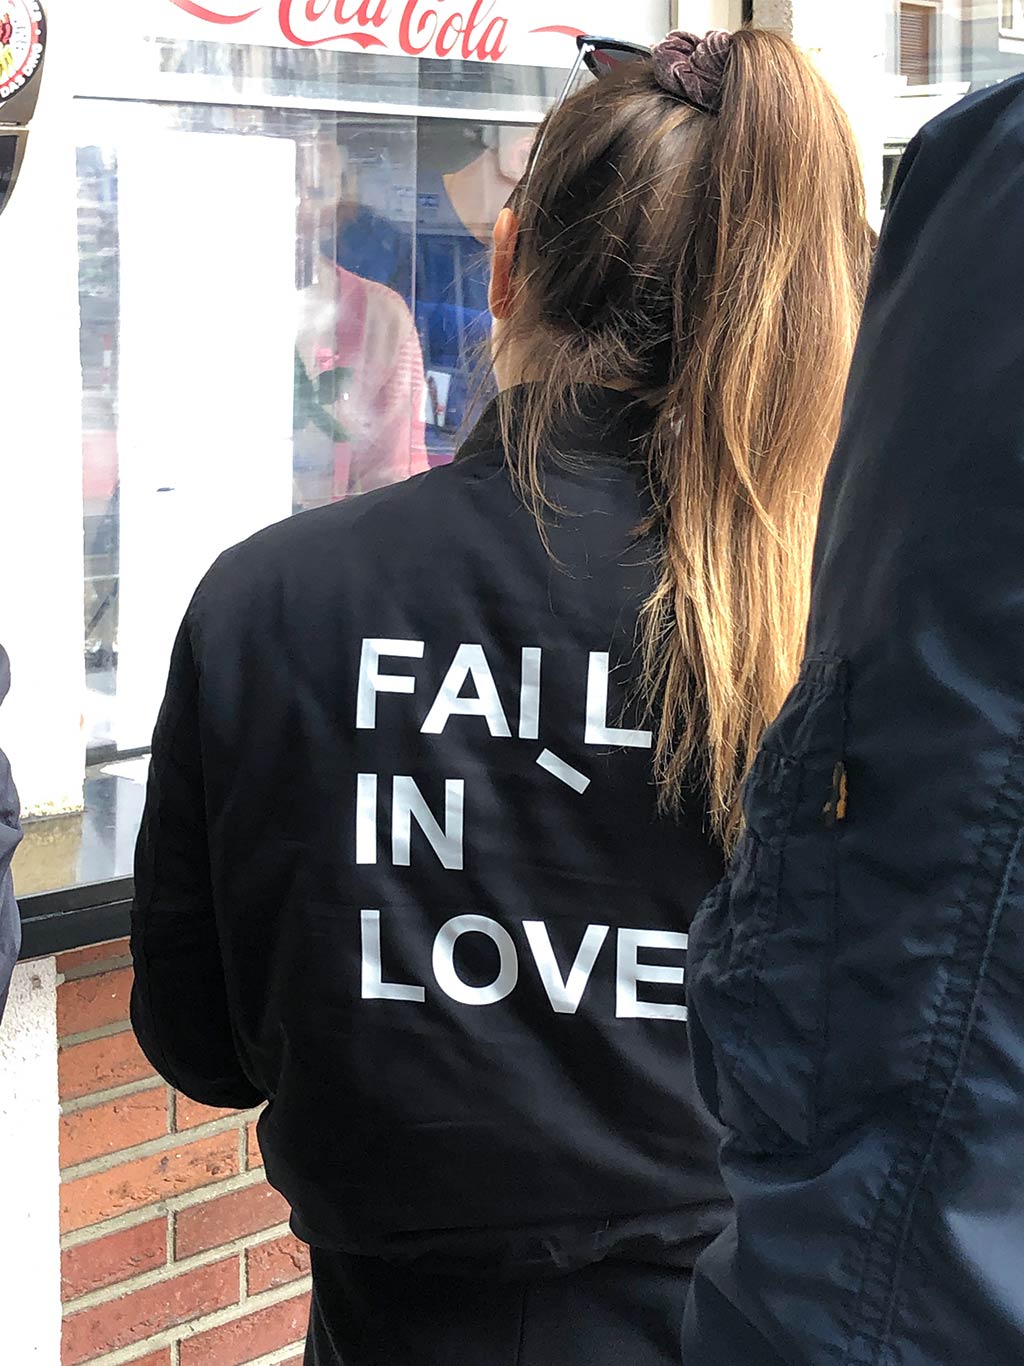 Jacke mit Slogan „Fall in love“ oder „Fail in love“